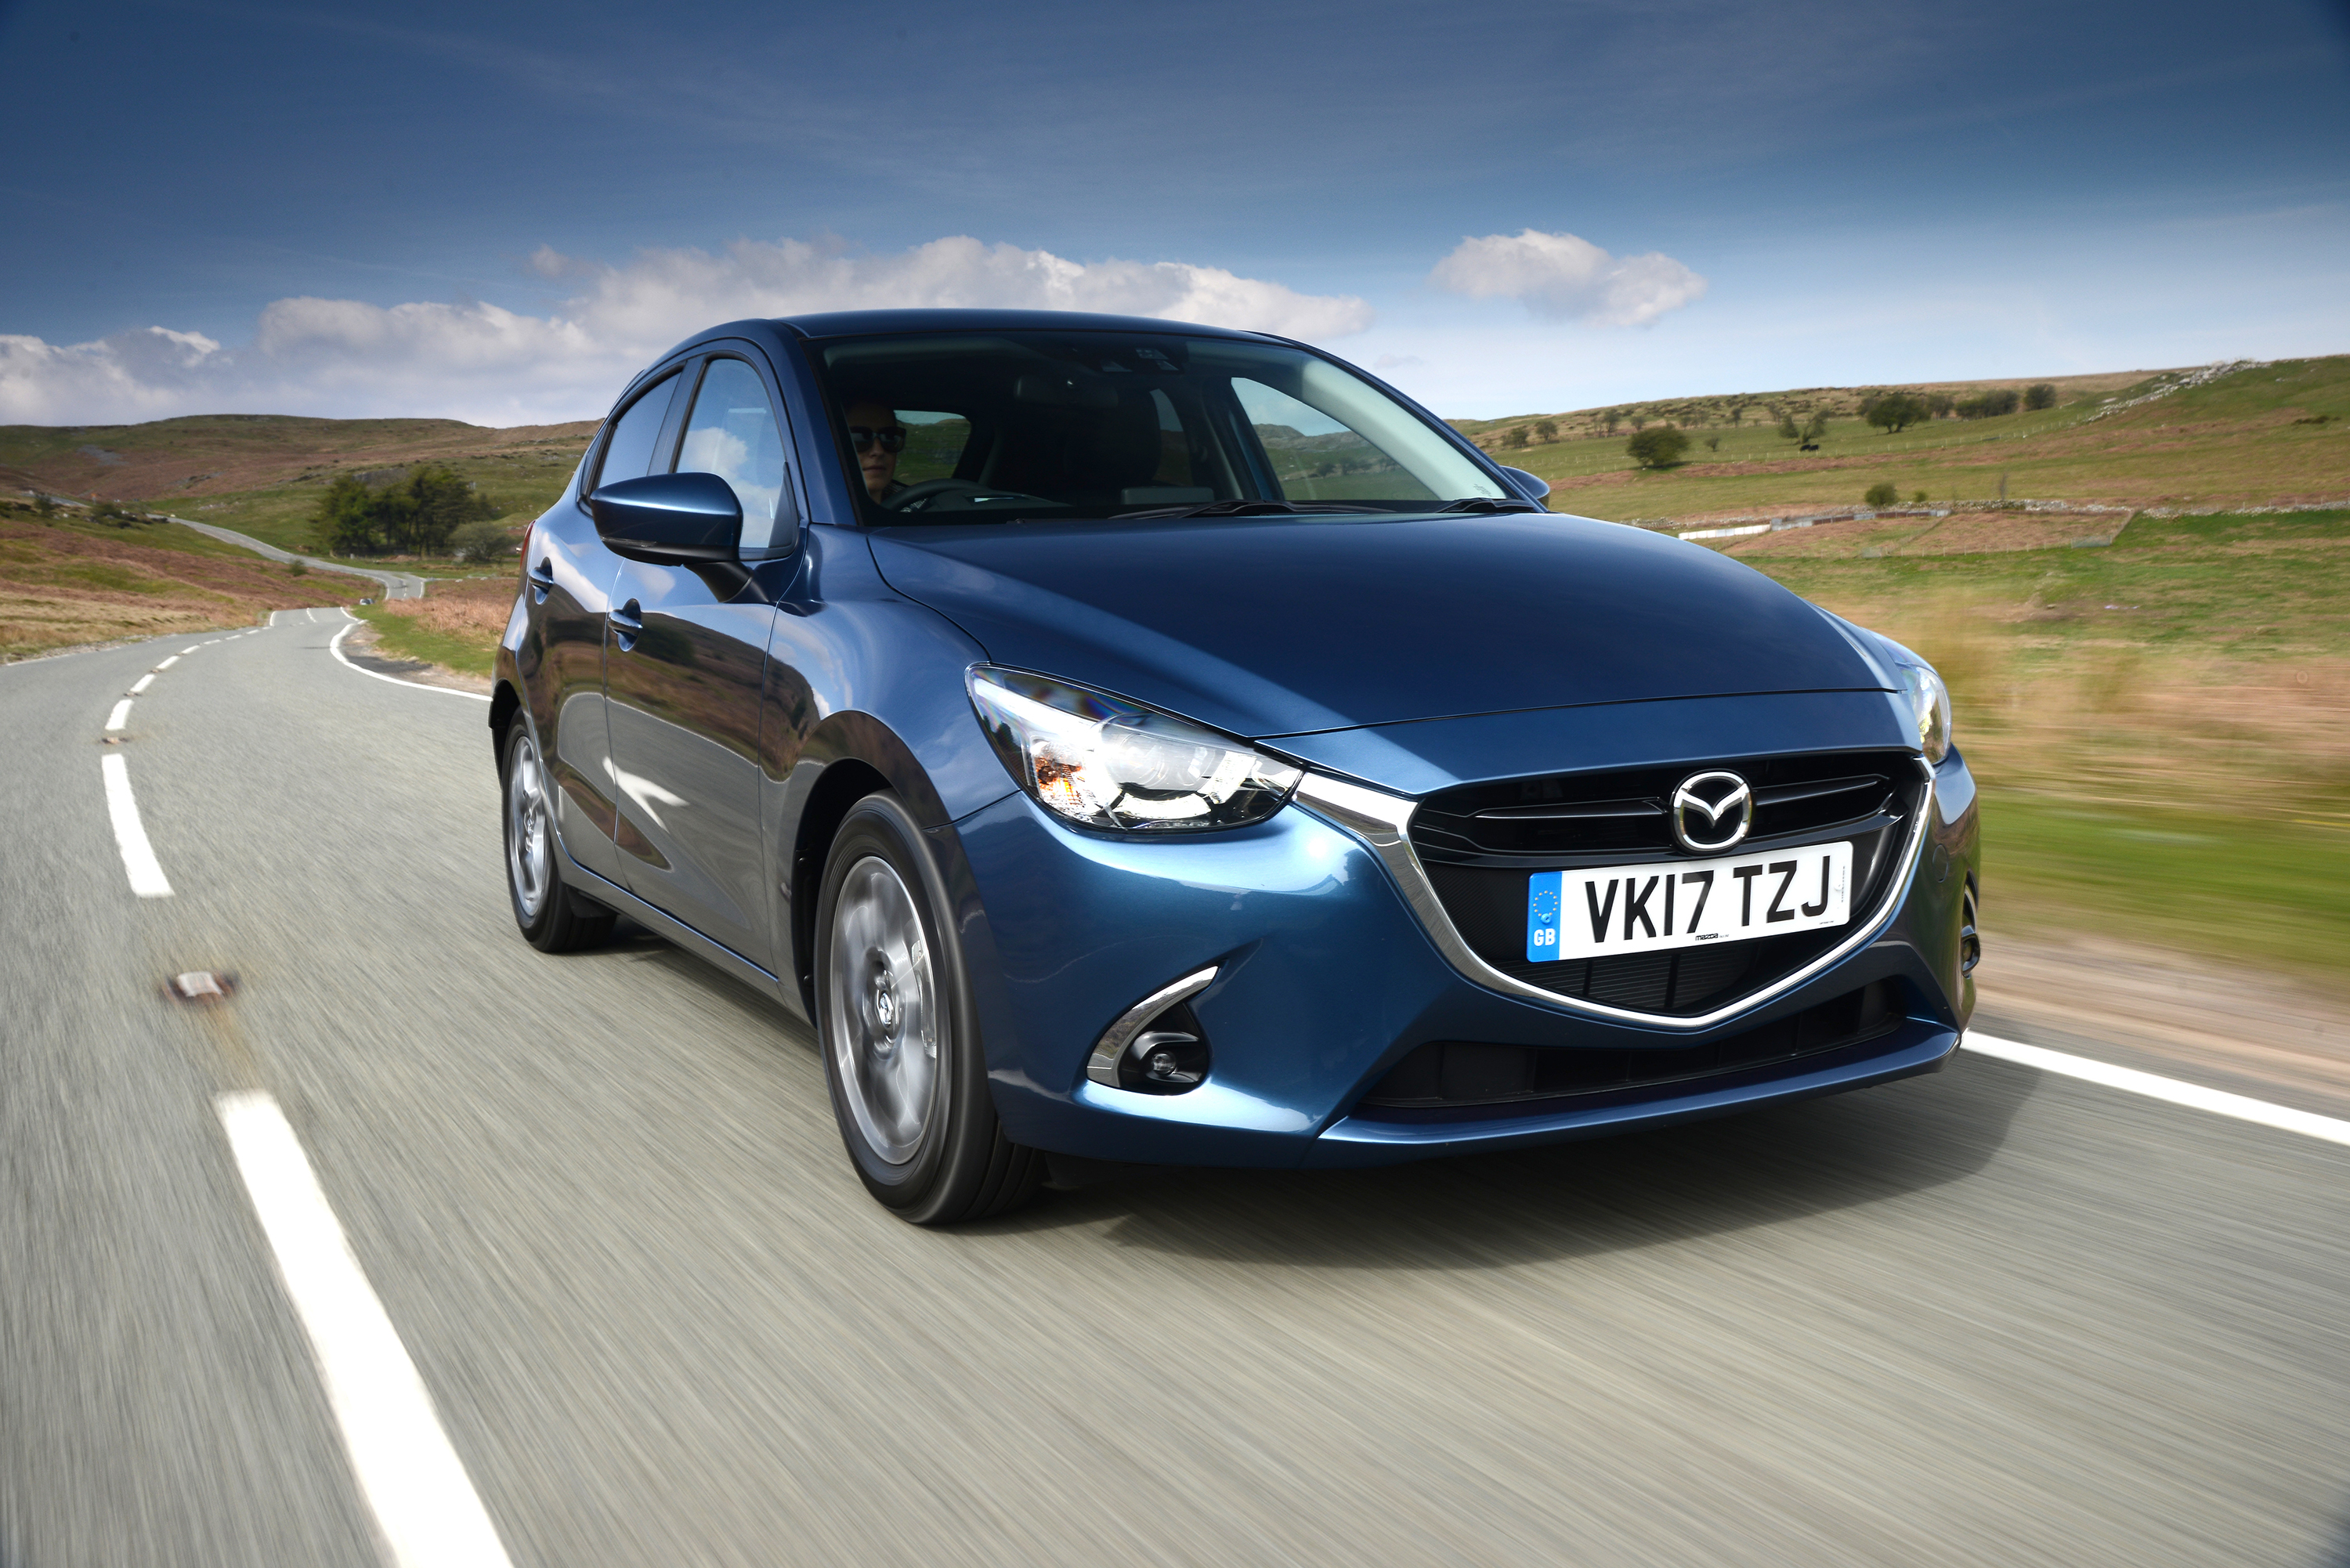 Well-engineered Mazda2 gains a new GT designation